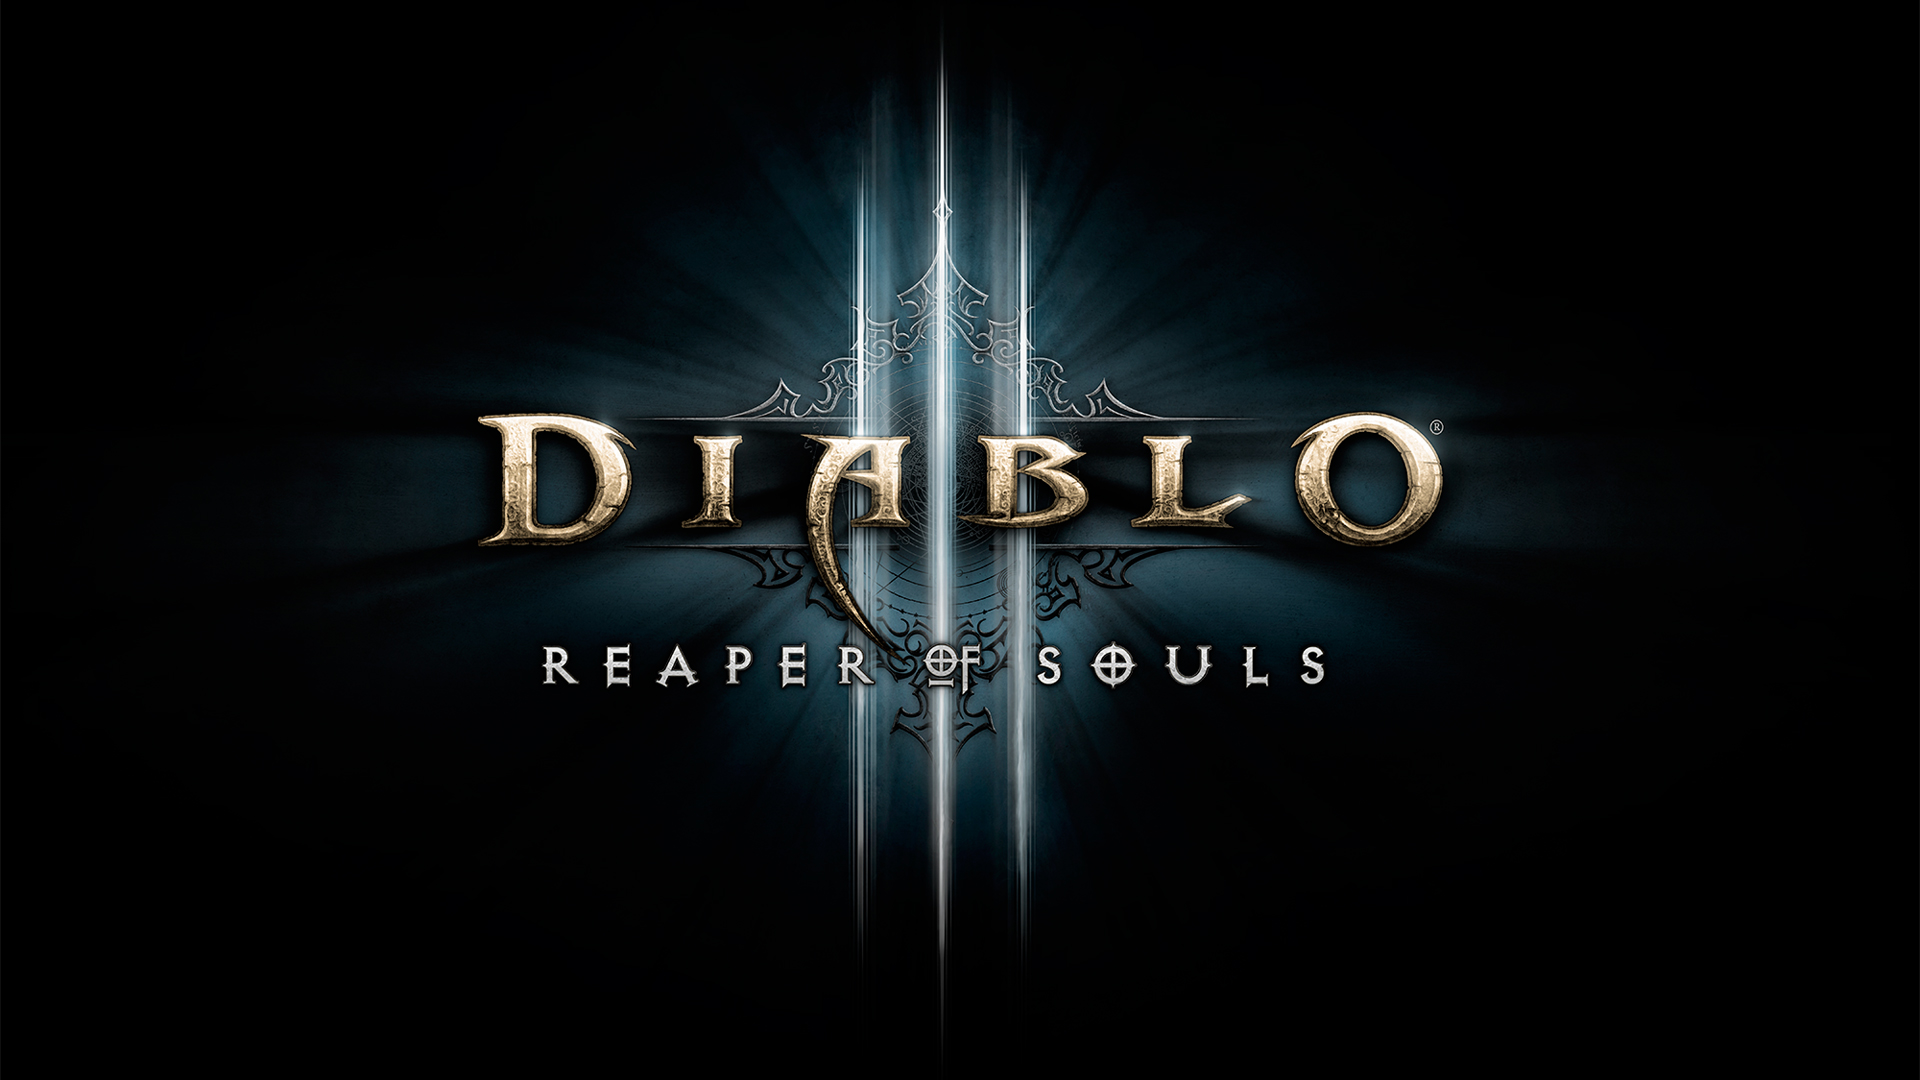 Diablo III: Reaper Of Souls Backgrounds, Compatible - PC, Mobile, Gadgets| 1920x1080 px